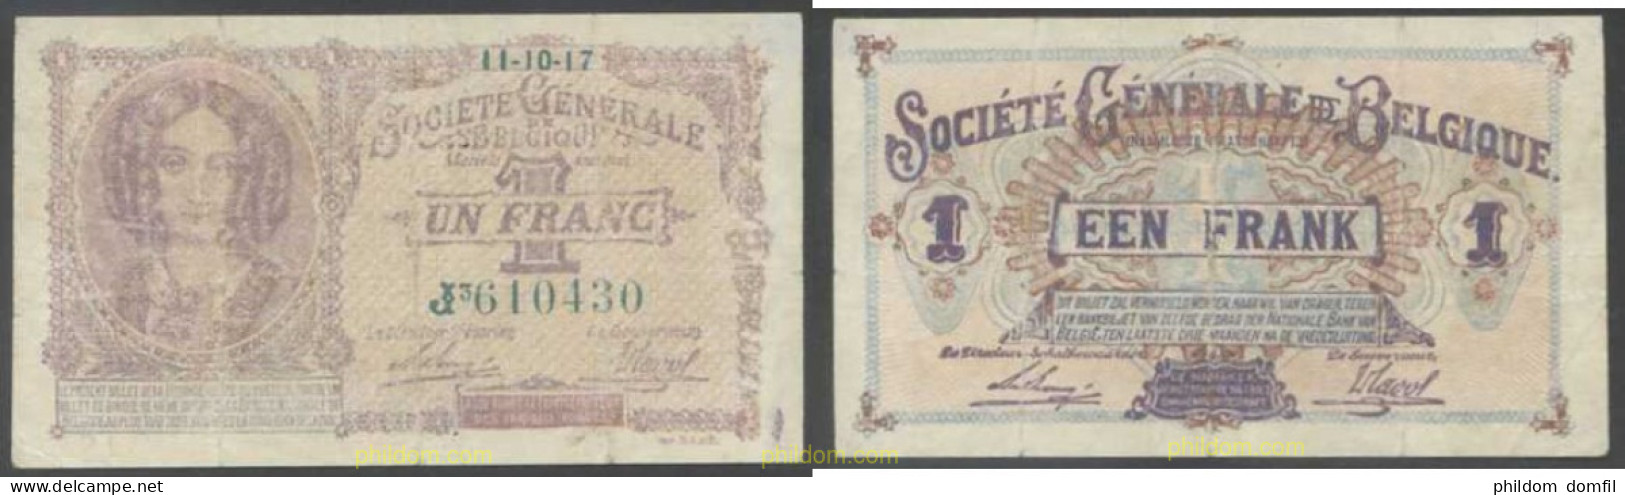 7882 BELGICA 1917 BELGIQUE 1 FRANC 1917 - Collections